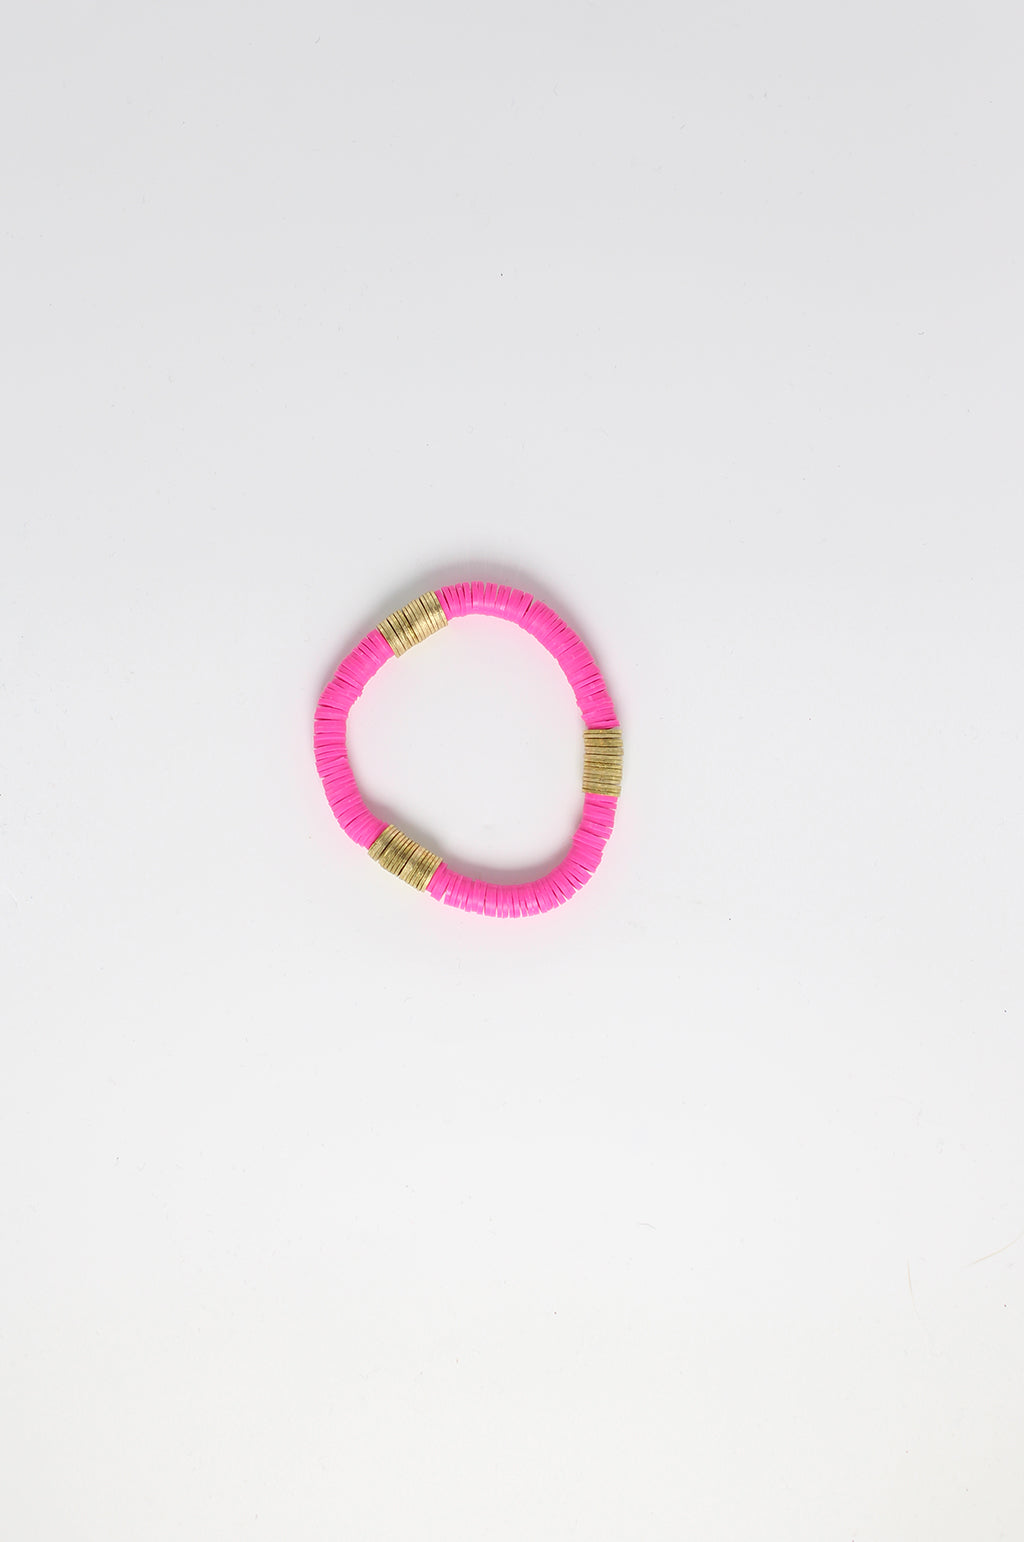 CEO Bracelets (Singles) by Annie Claire Designs - SoSis